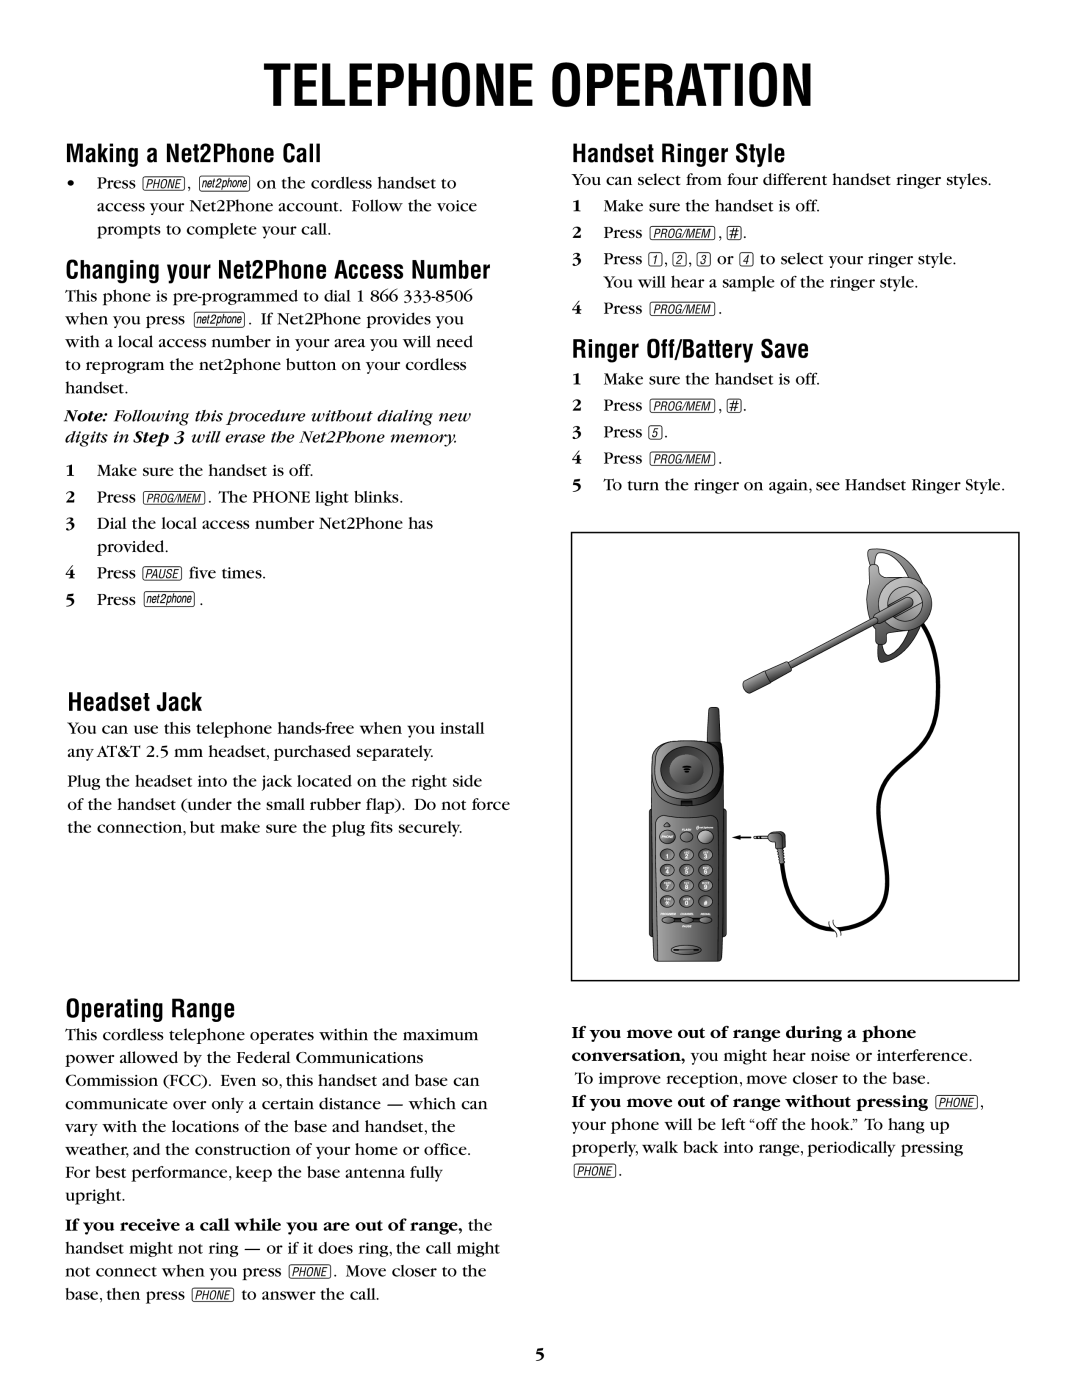 AT&T 6200 user manual Making a Net2Phone Call, Handset Ringer Style, Ringer Off/Battery Save, Headset Jack, Operating Range 